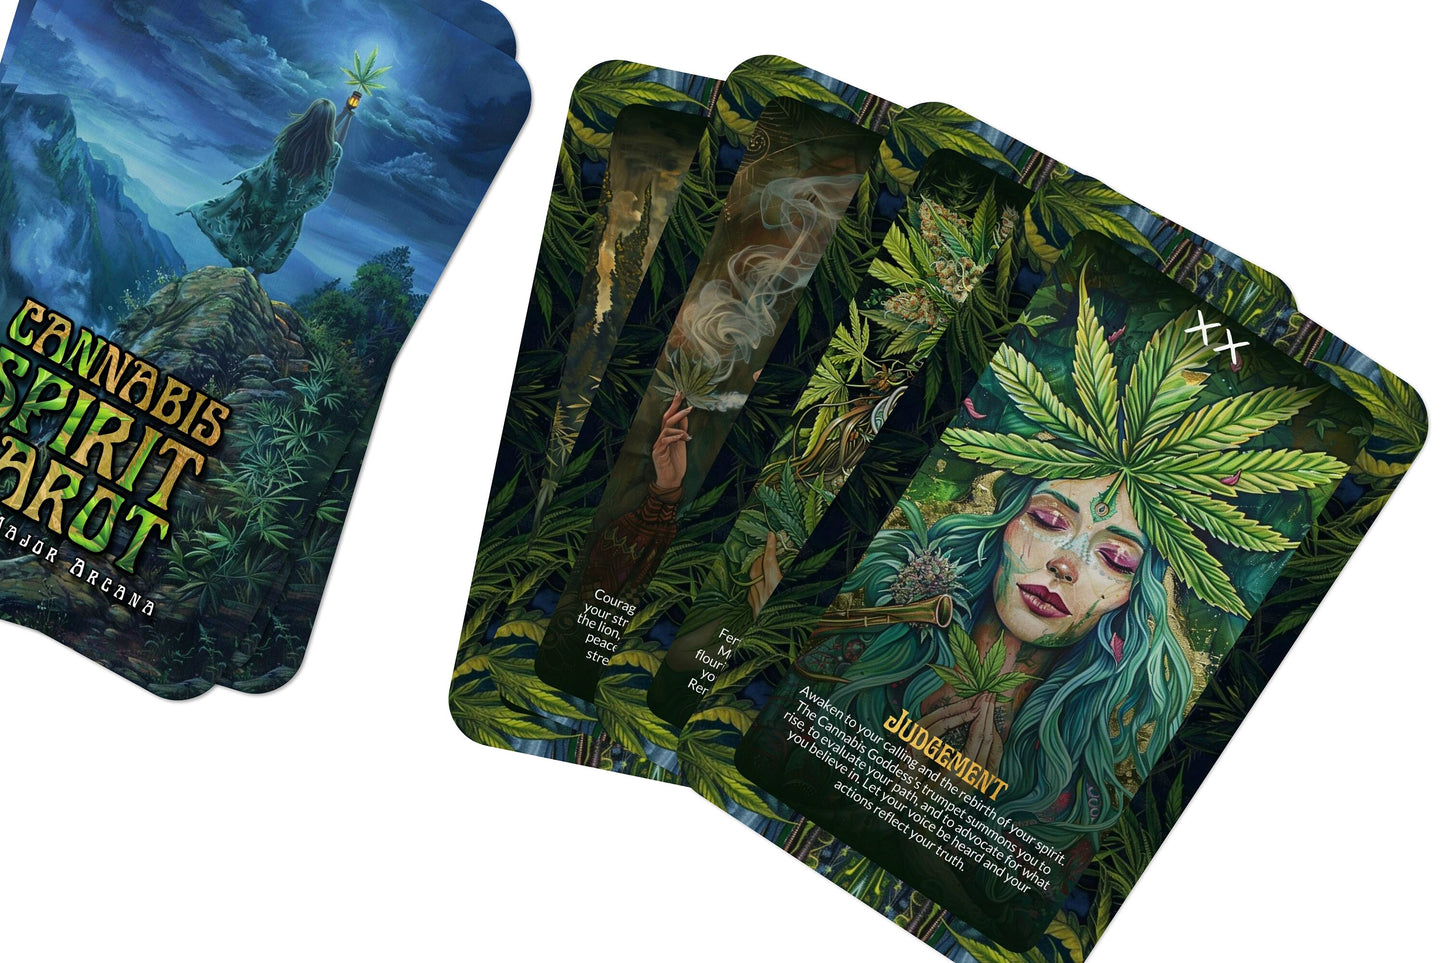 Cannabis Spirit Tarot - Goddess Major Arcana